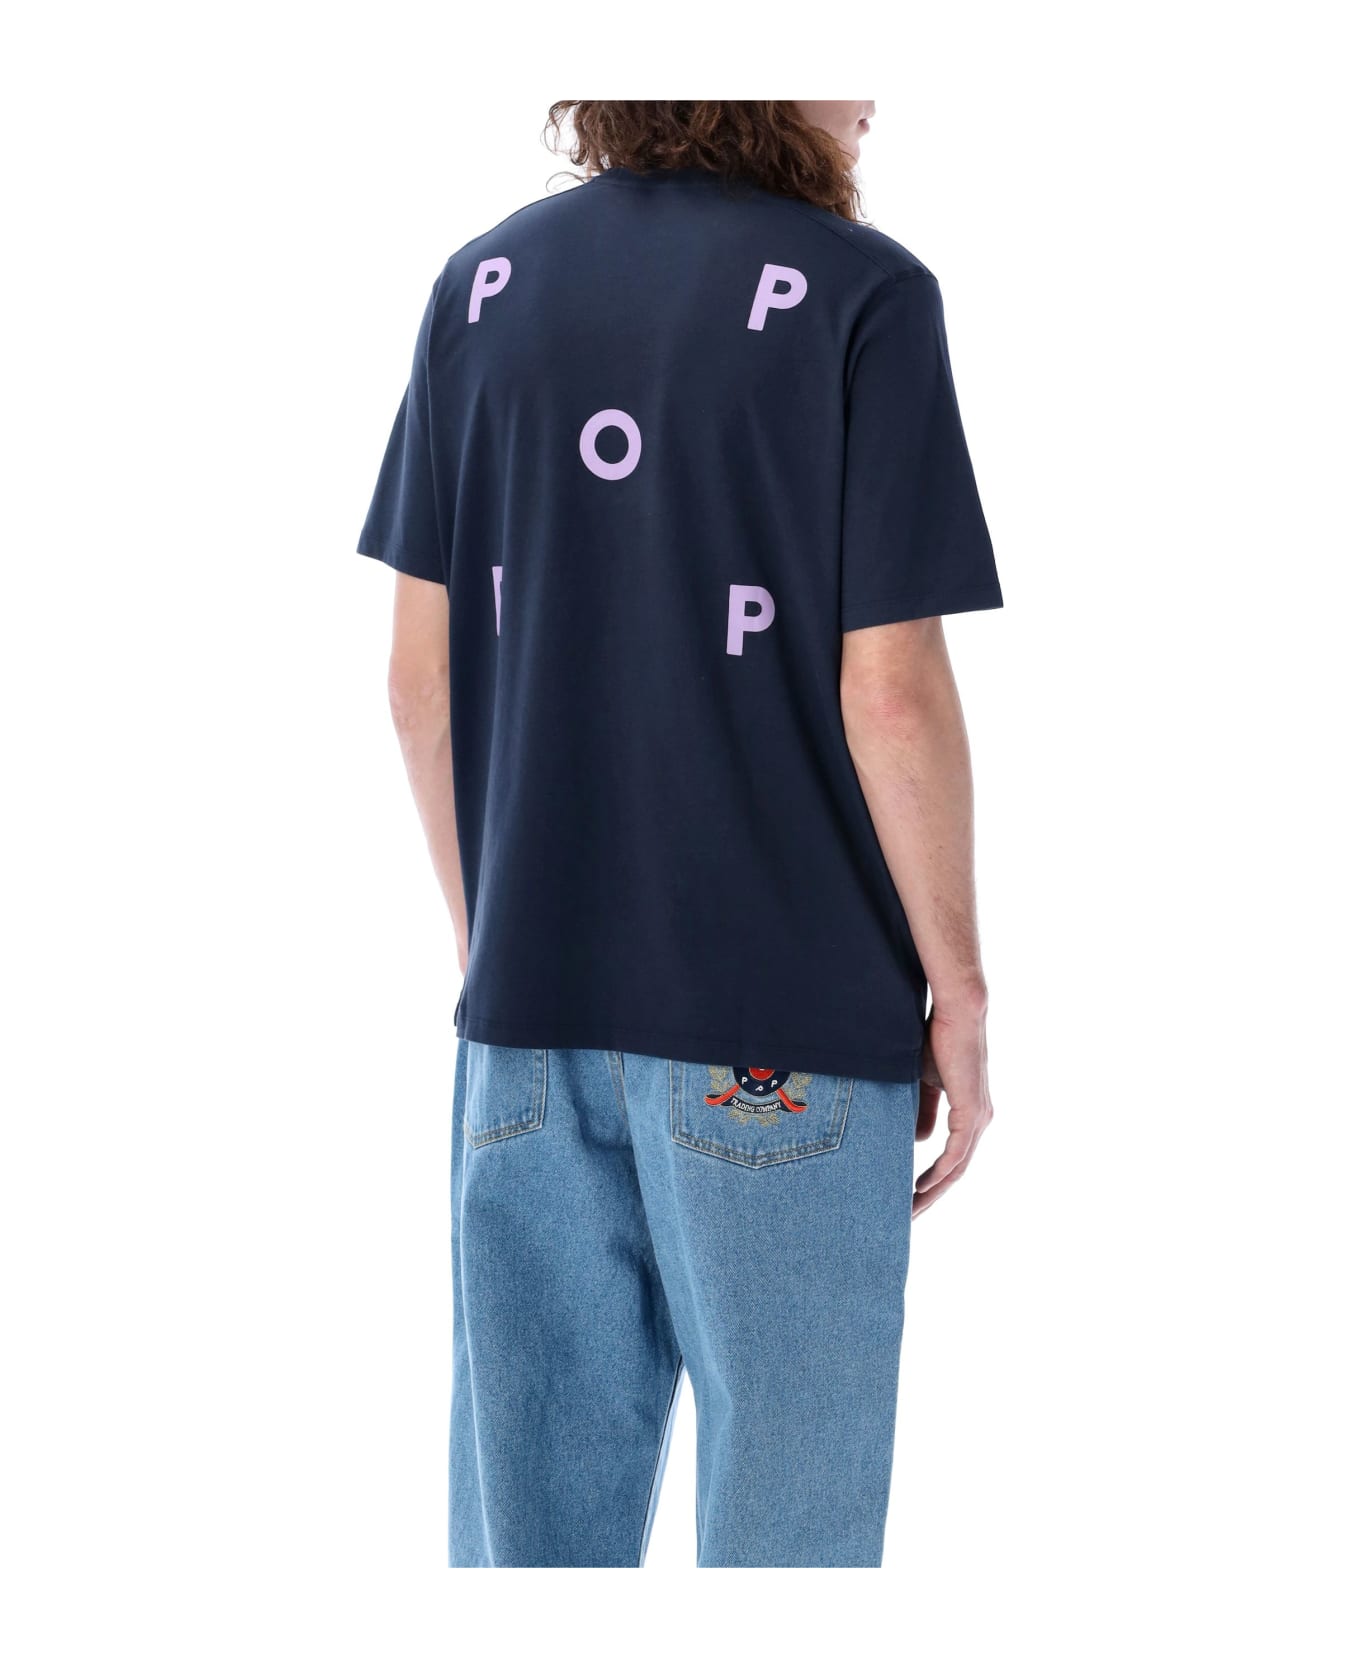 Pop Trading Company Pop Logo T-shirt - NAVY